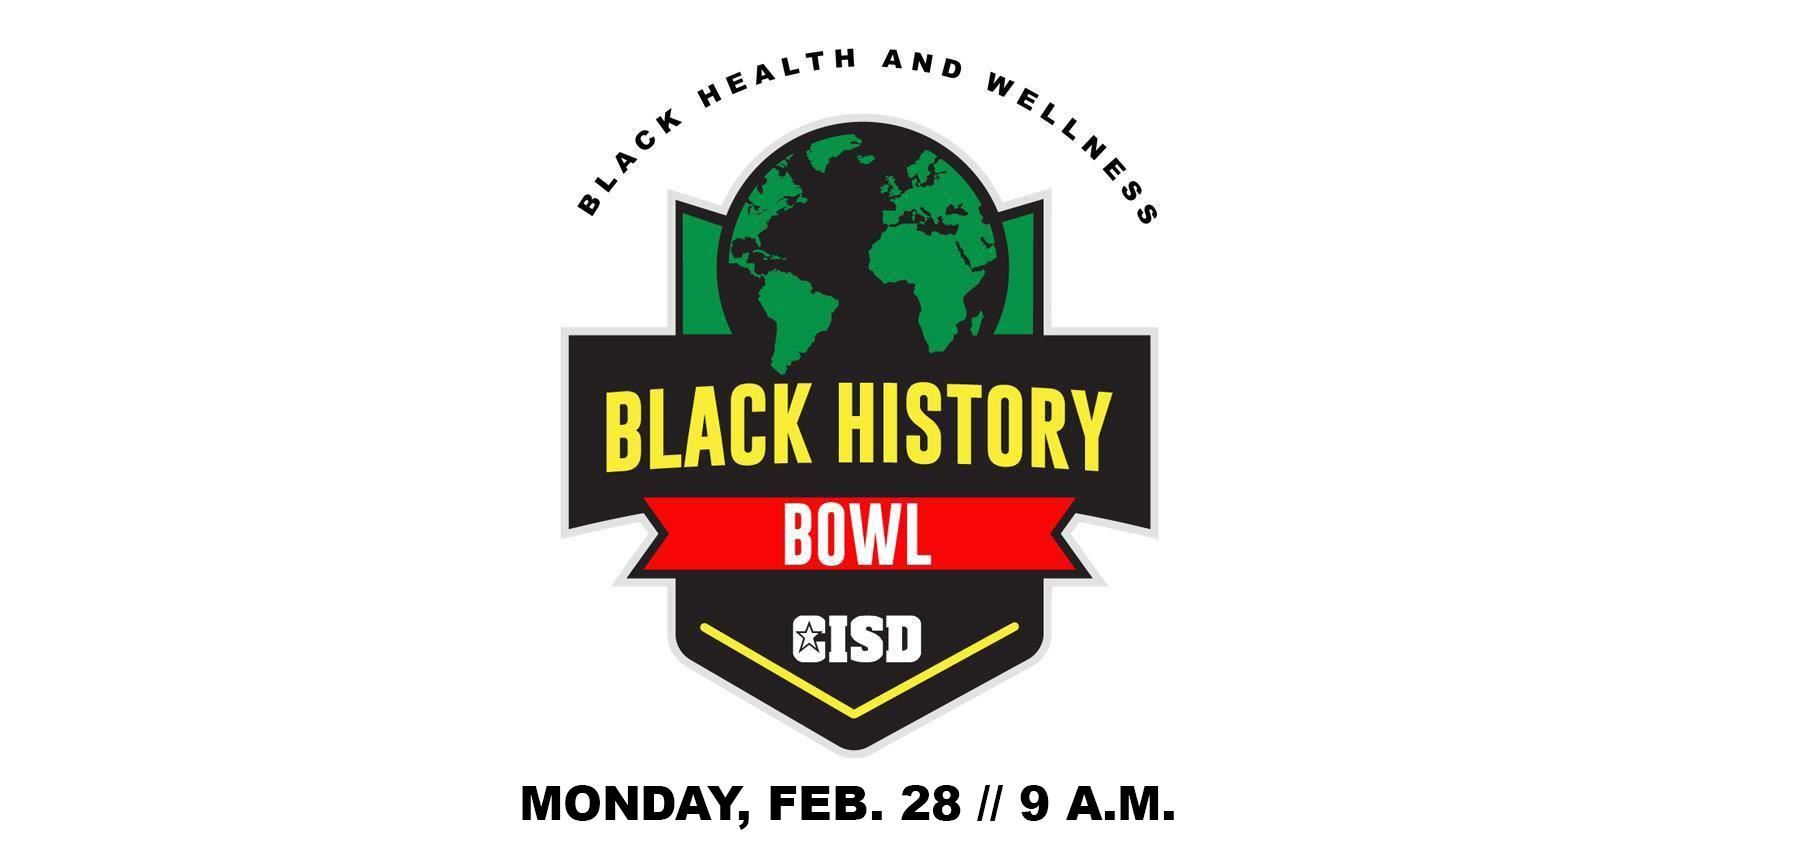 Black History Bowl - Monday, Feb. 28 // 9 a.m.